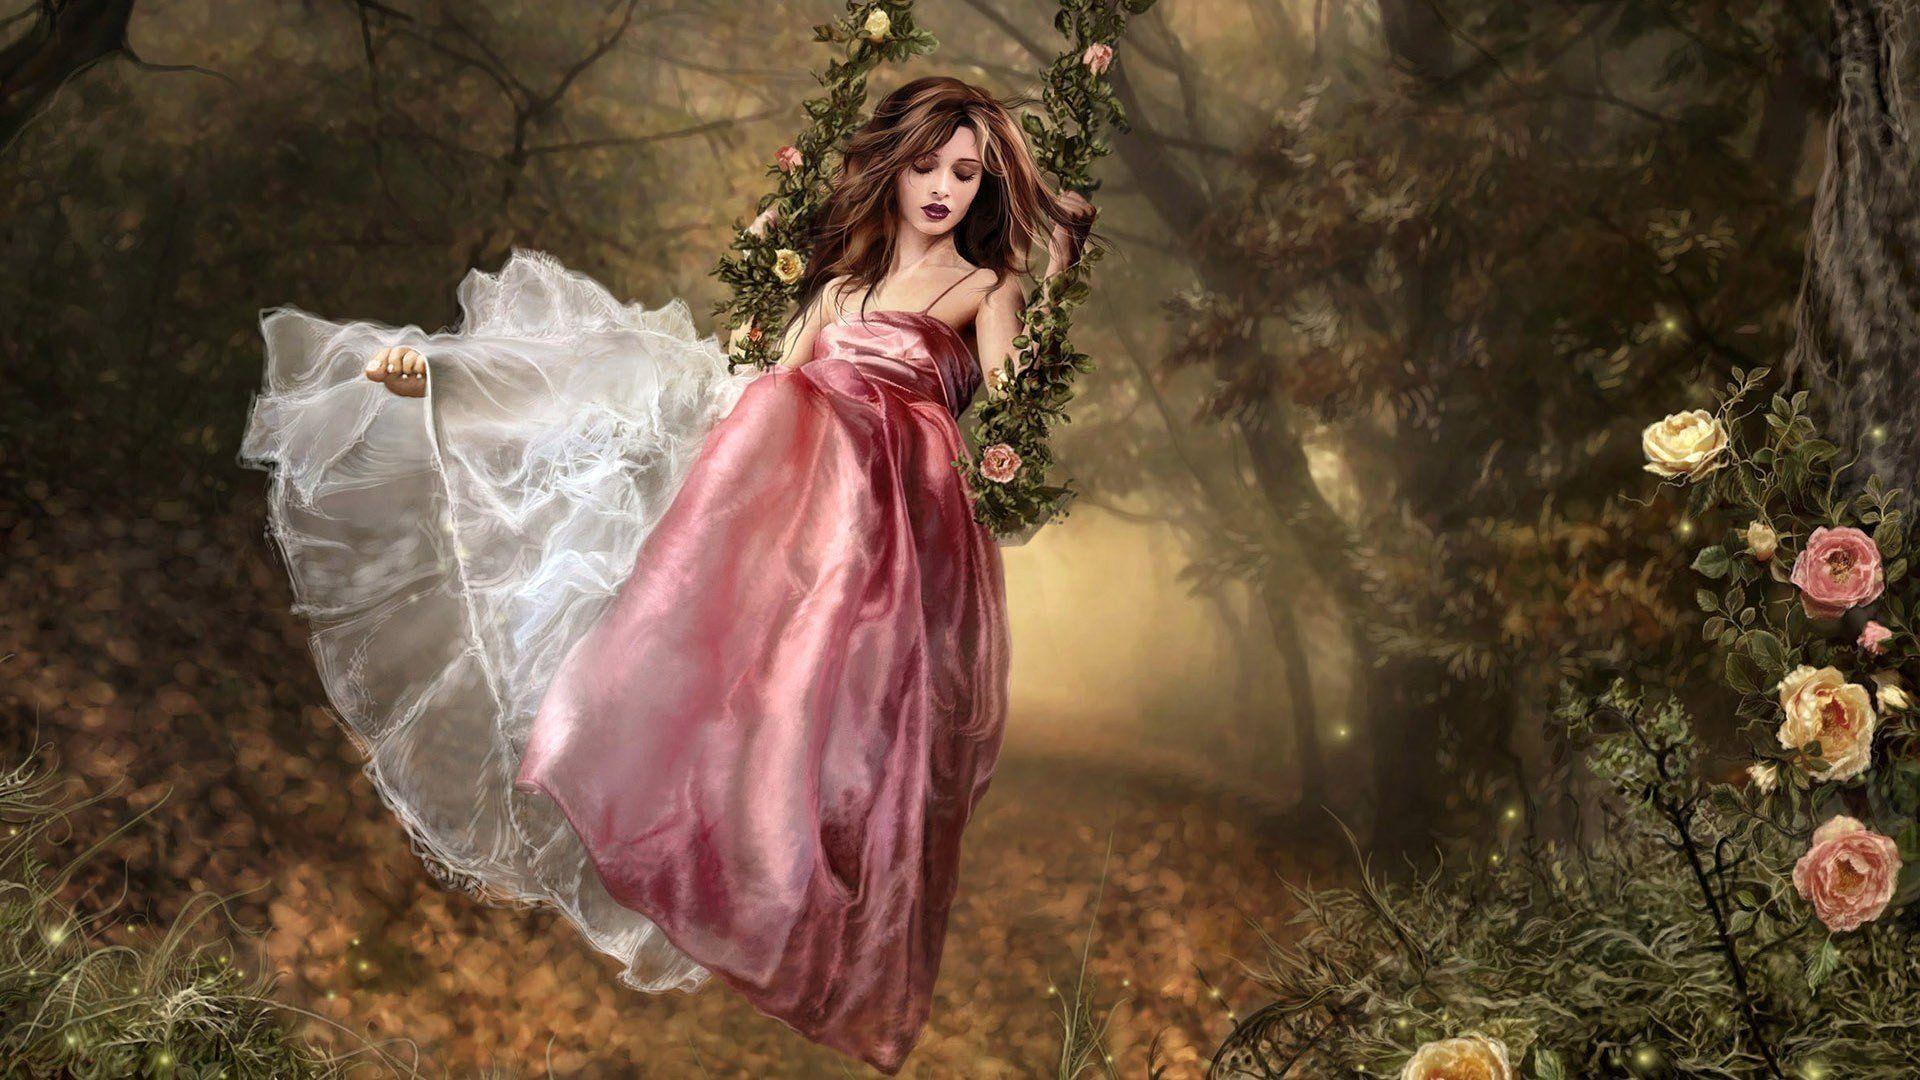 Fantasy Dream Girl Wallpaper. Fairy wallpaper, Princess